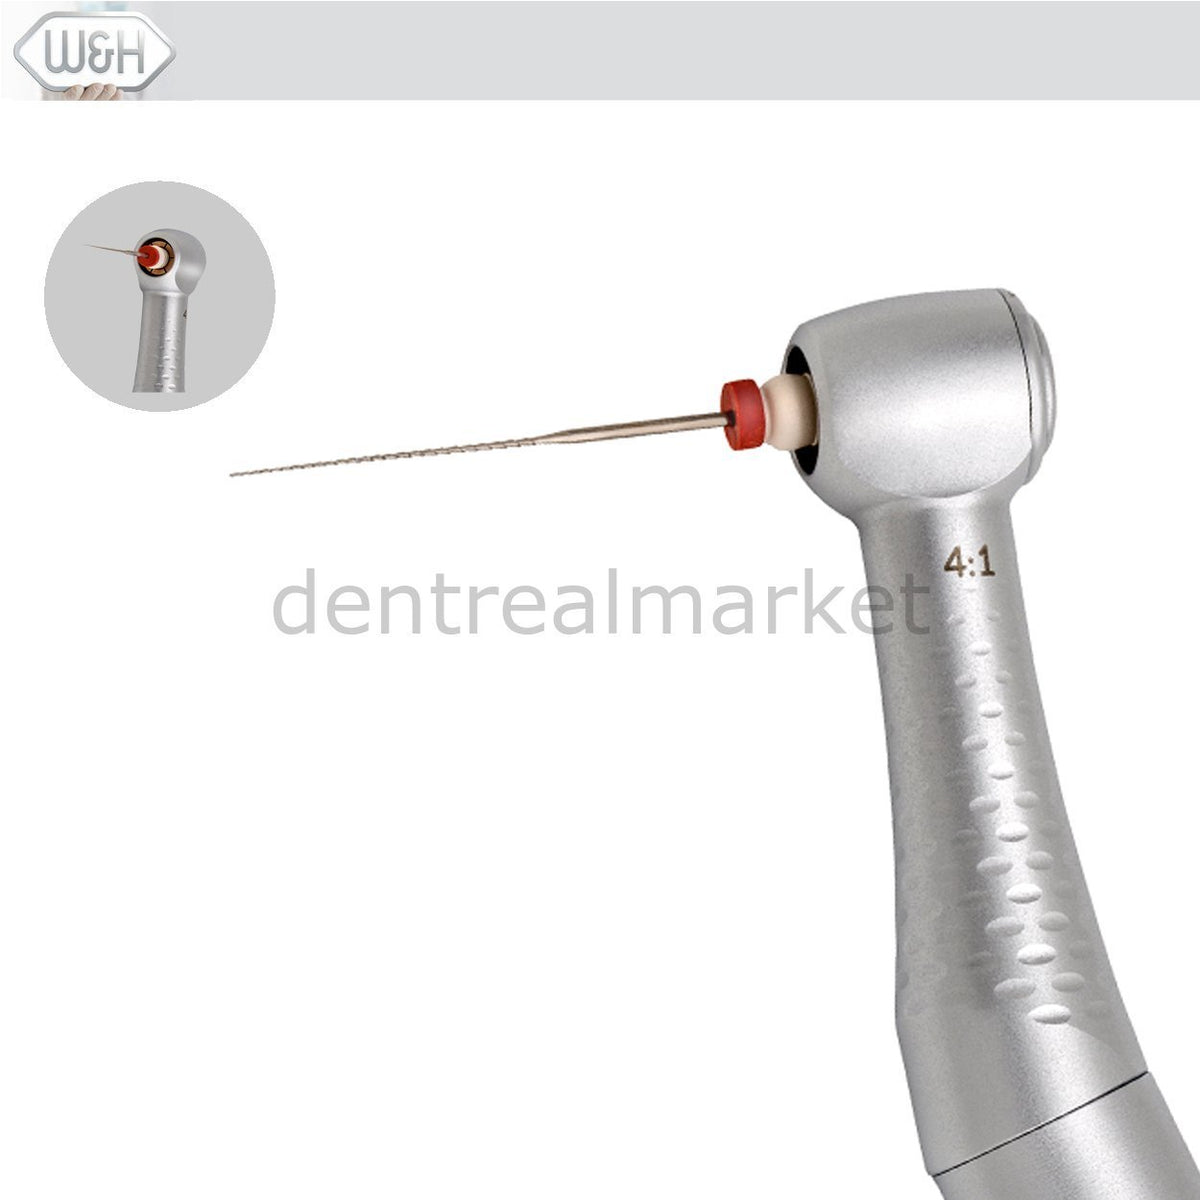 DentrealStore - W&H Dental EB-62 Endodontics Contra-angle Handle Compatible